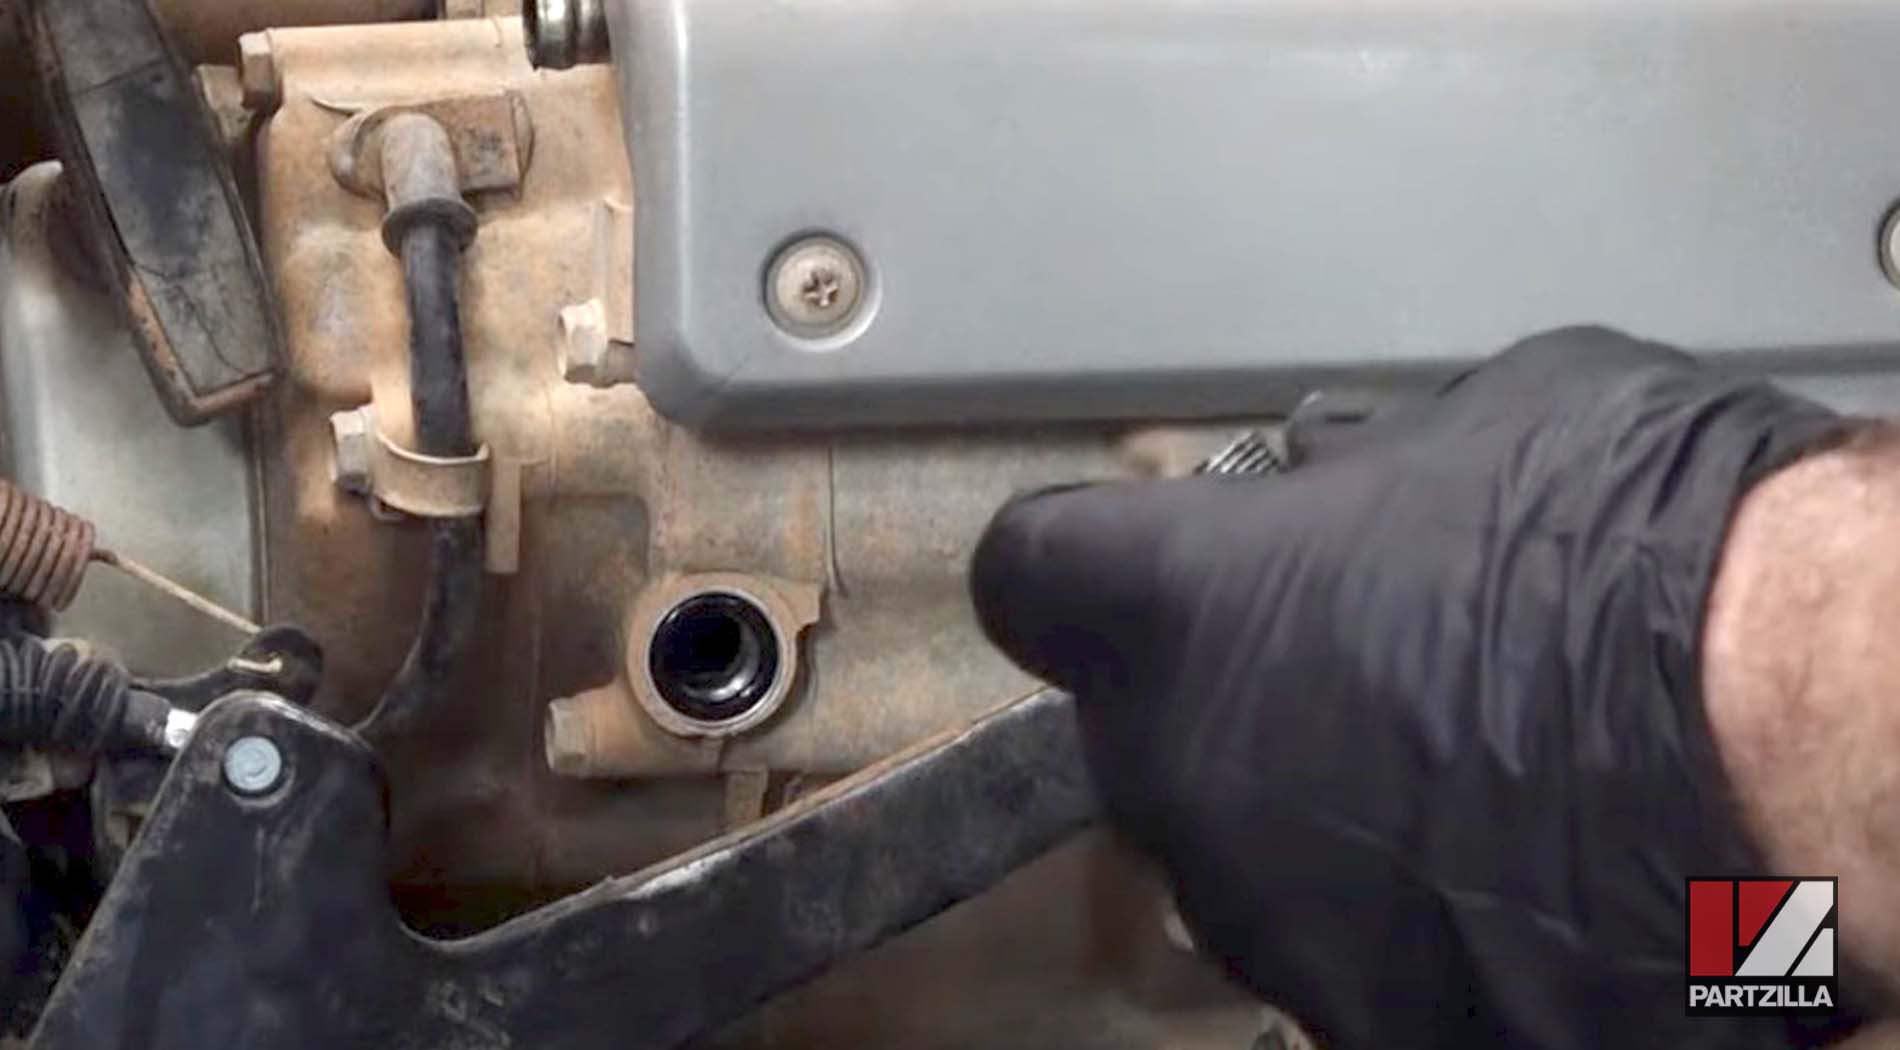 Honda Rancher 350 engine teardown crankcase bolt